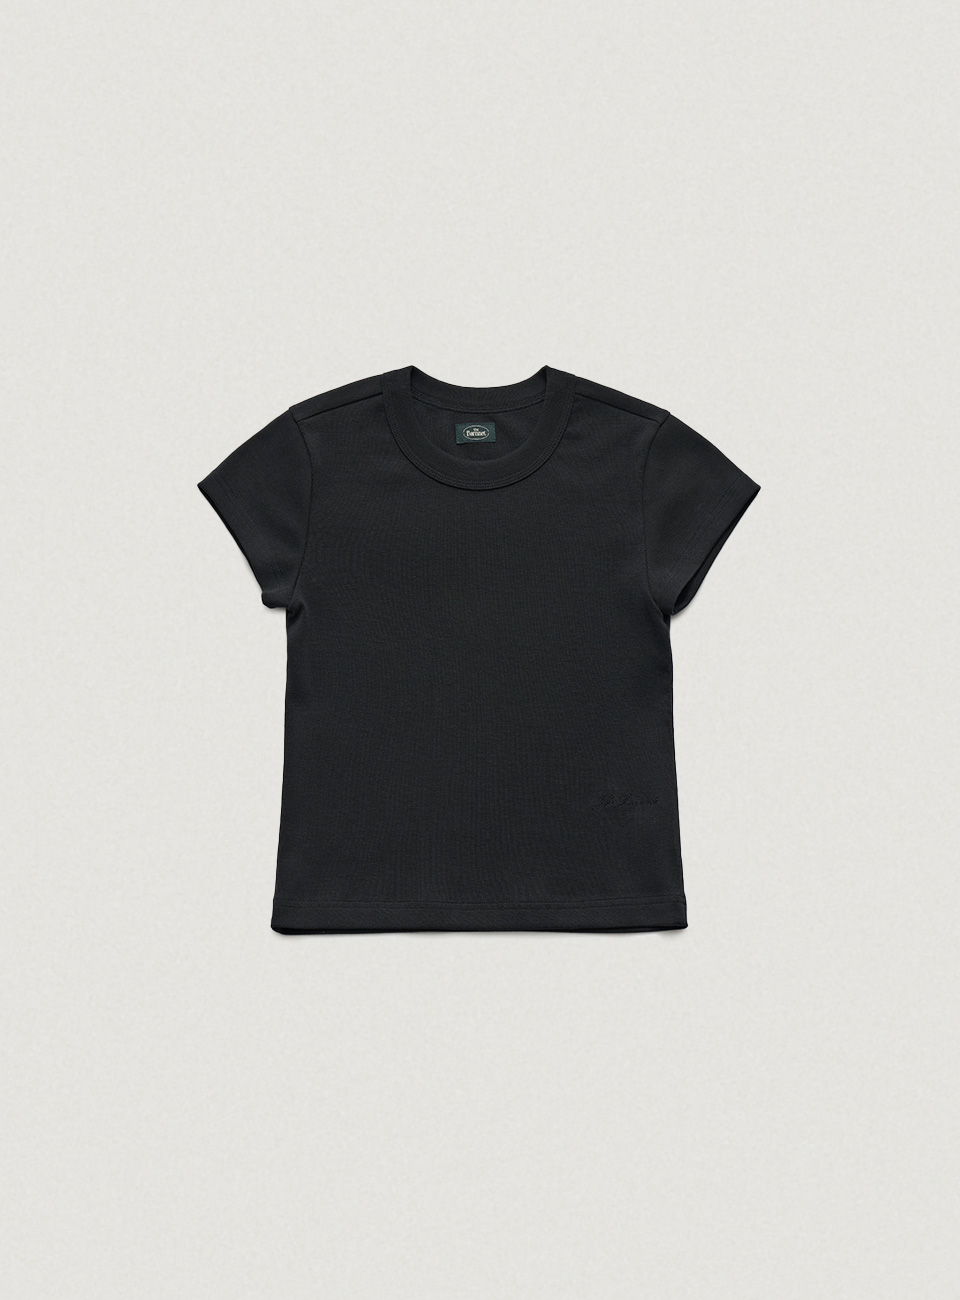 Black Fudge Cropped T-Shirt